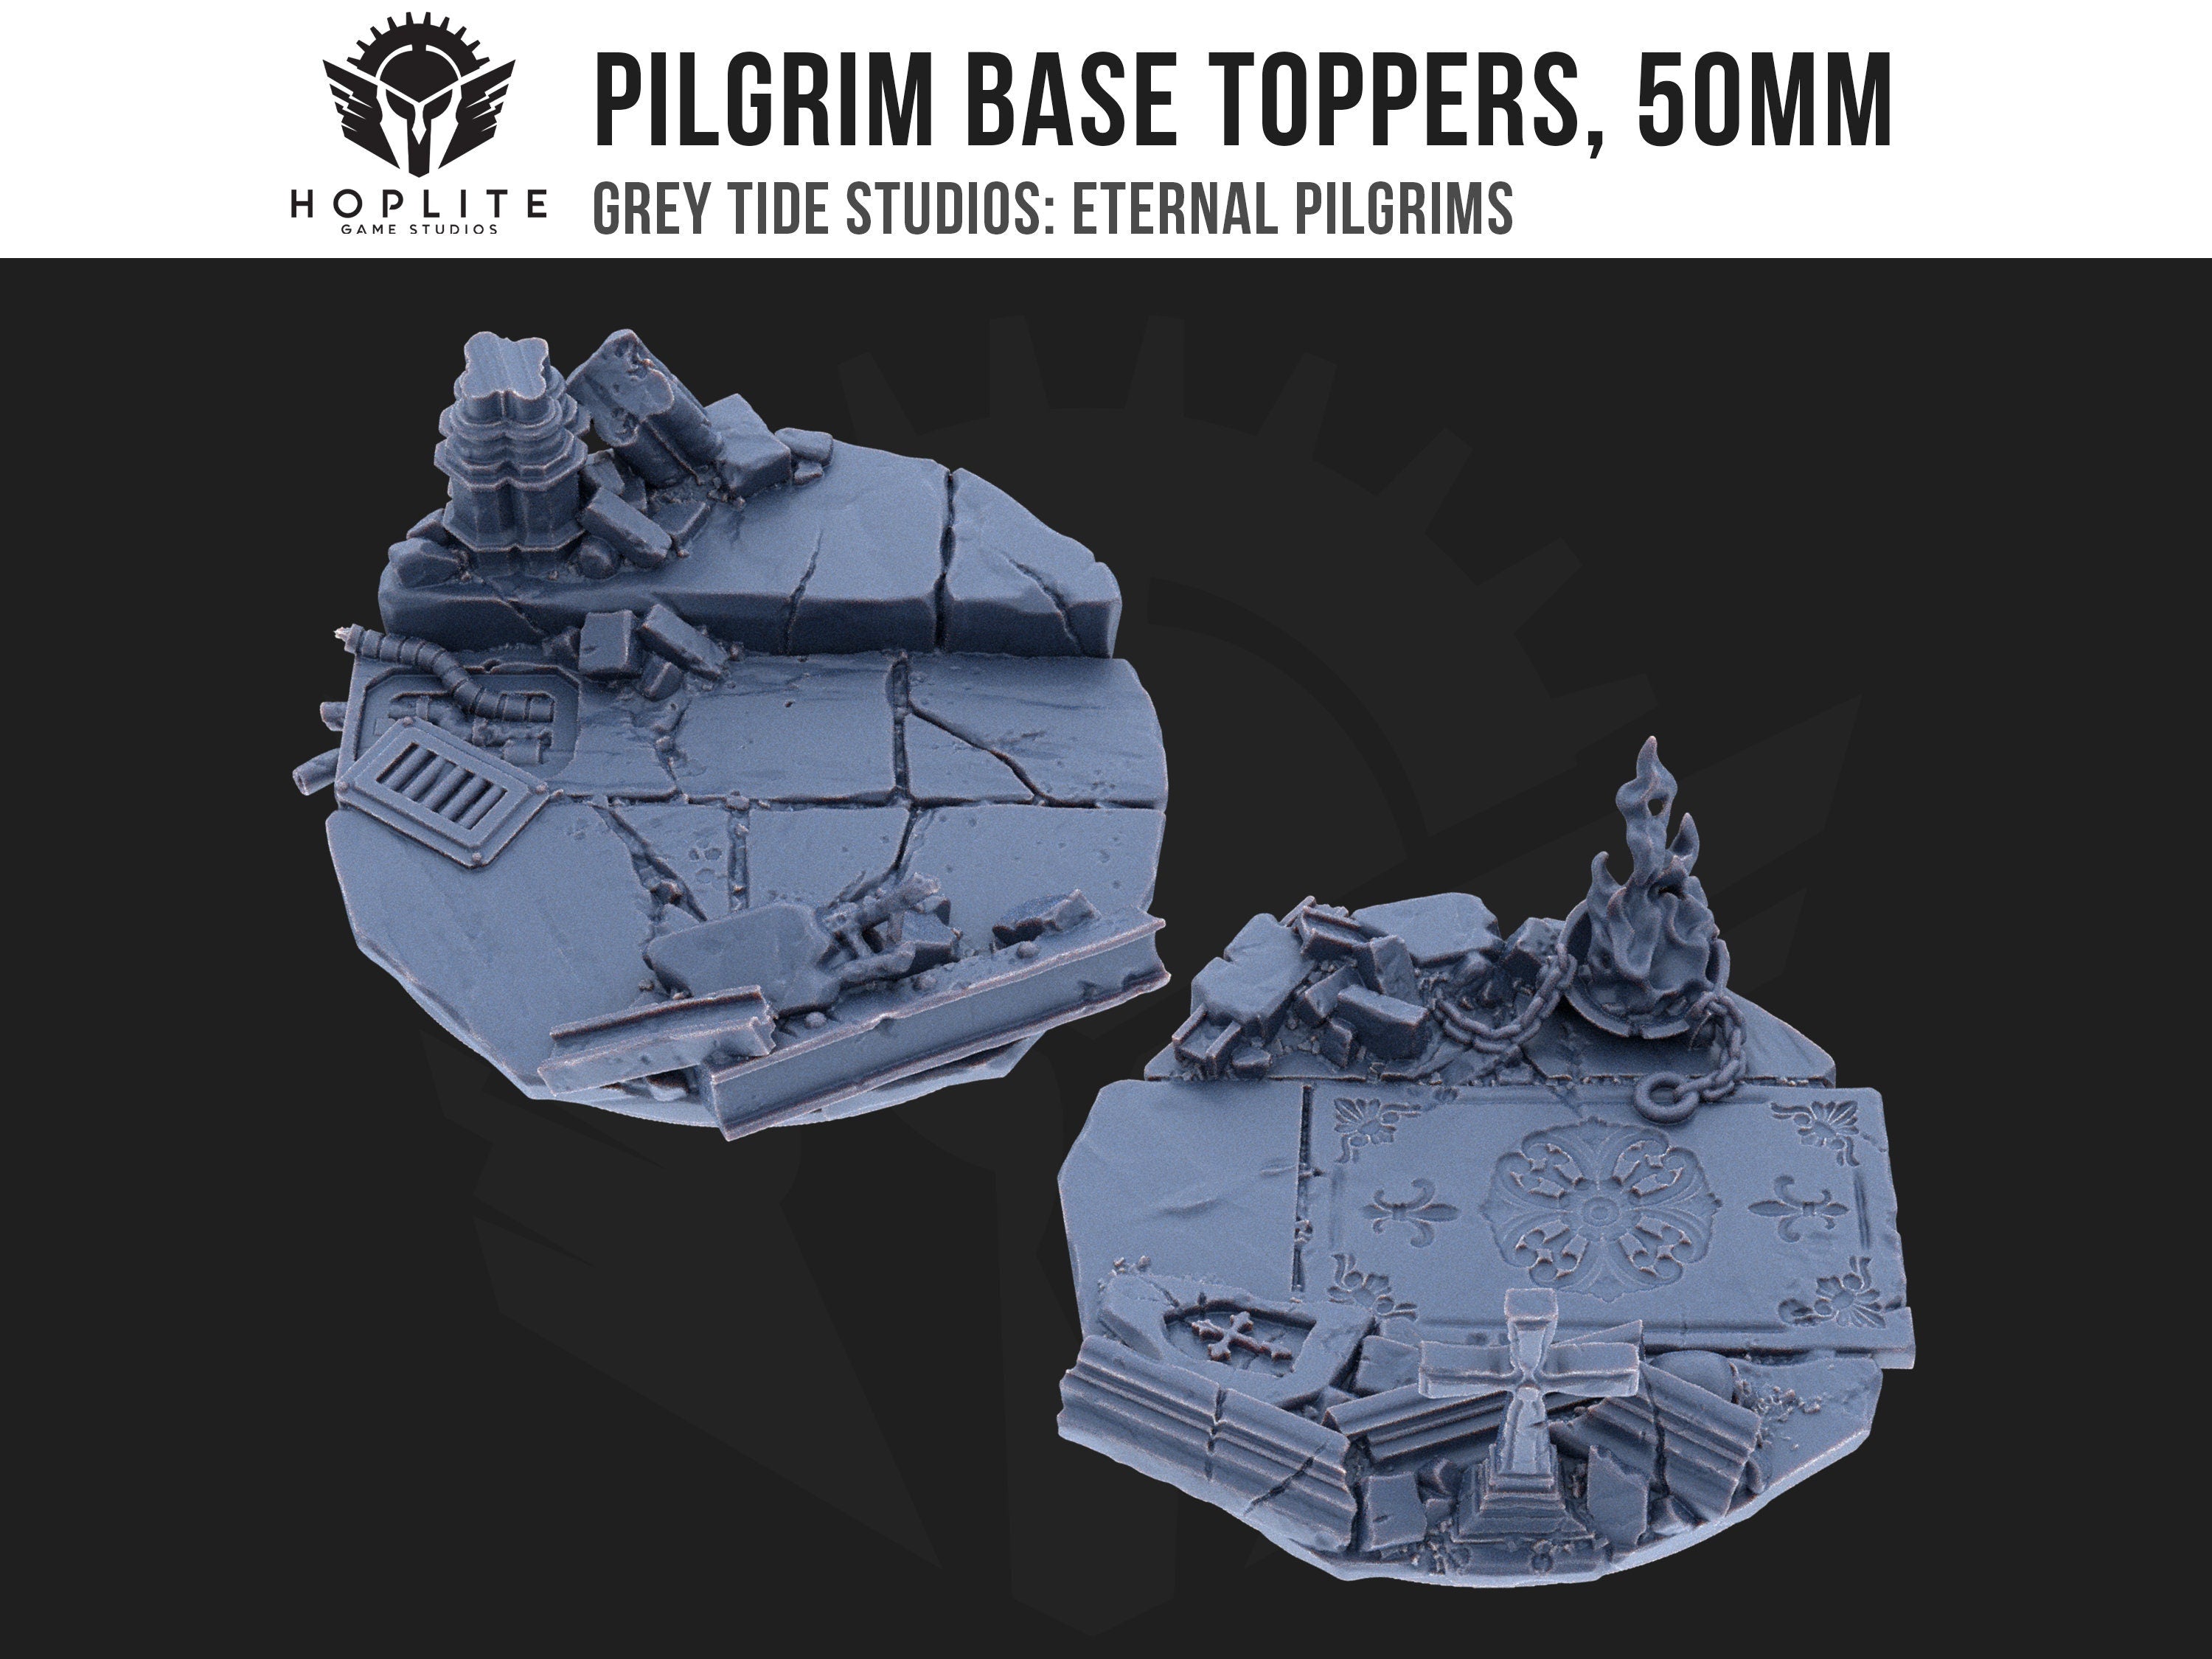 Pilgrim-Basisaufsätze, 50 mm (x2) | Grey Tide Studios | Eternal Pilgrims | Umbauteile und Bits